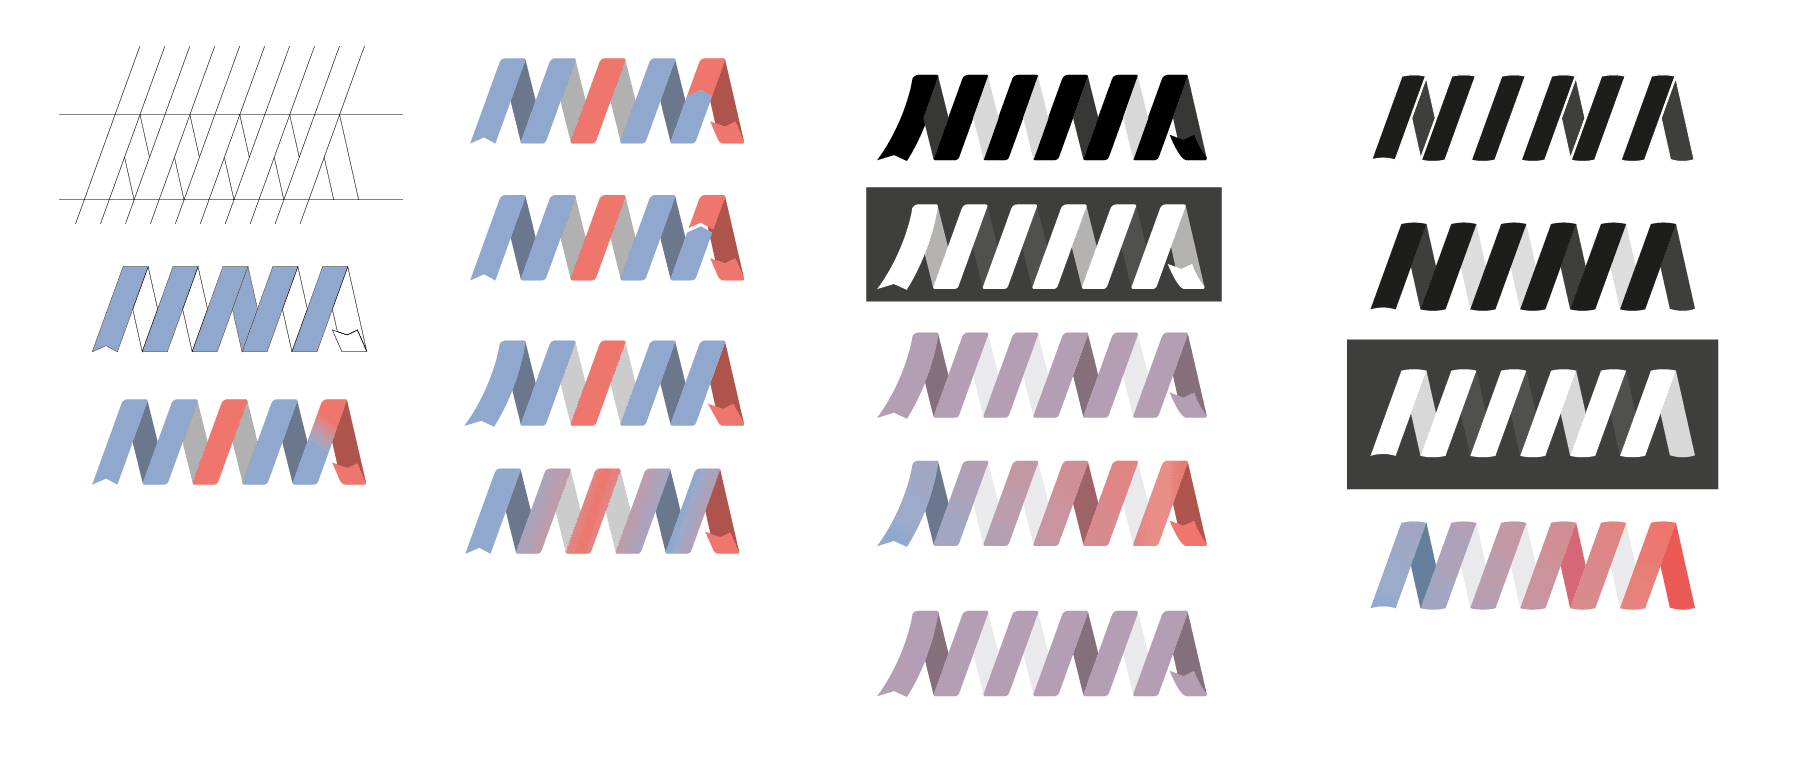 NINA Logo Evolution